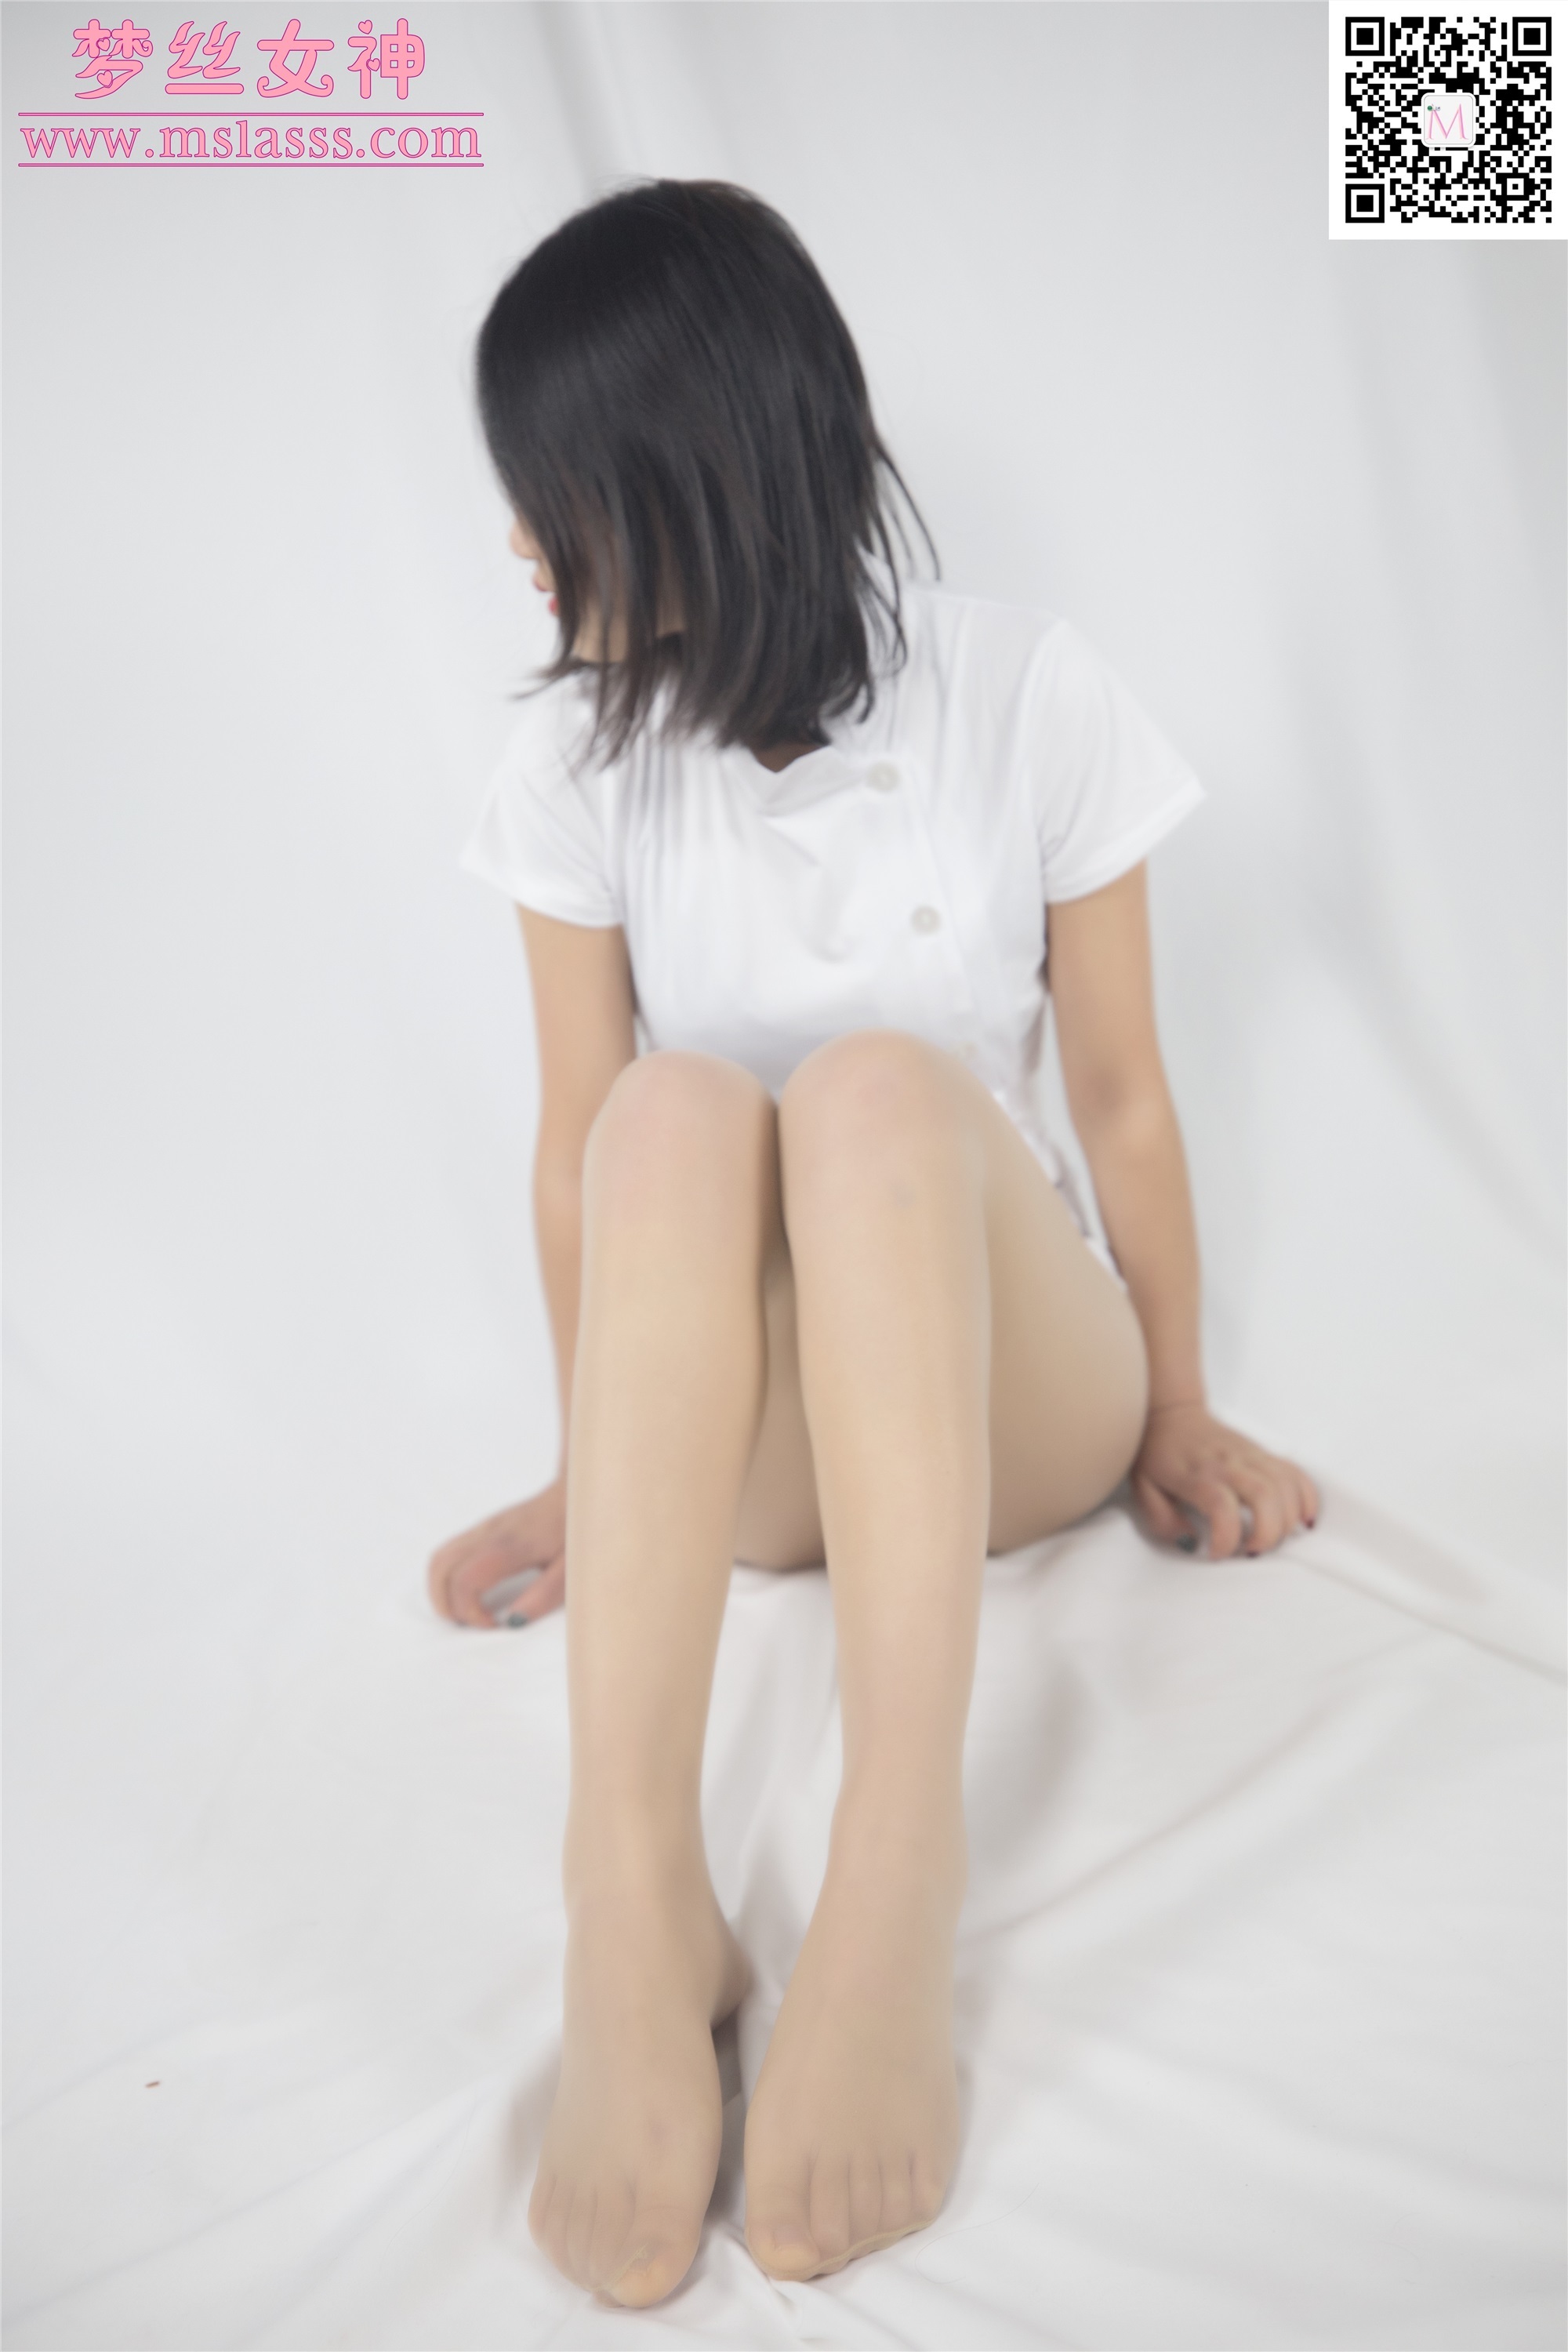 Mslass dream silk goddess 2020-01-21 vol.092 small private room of M-line pantyhose